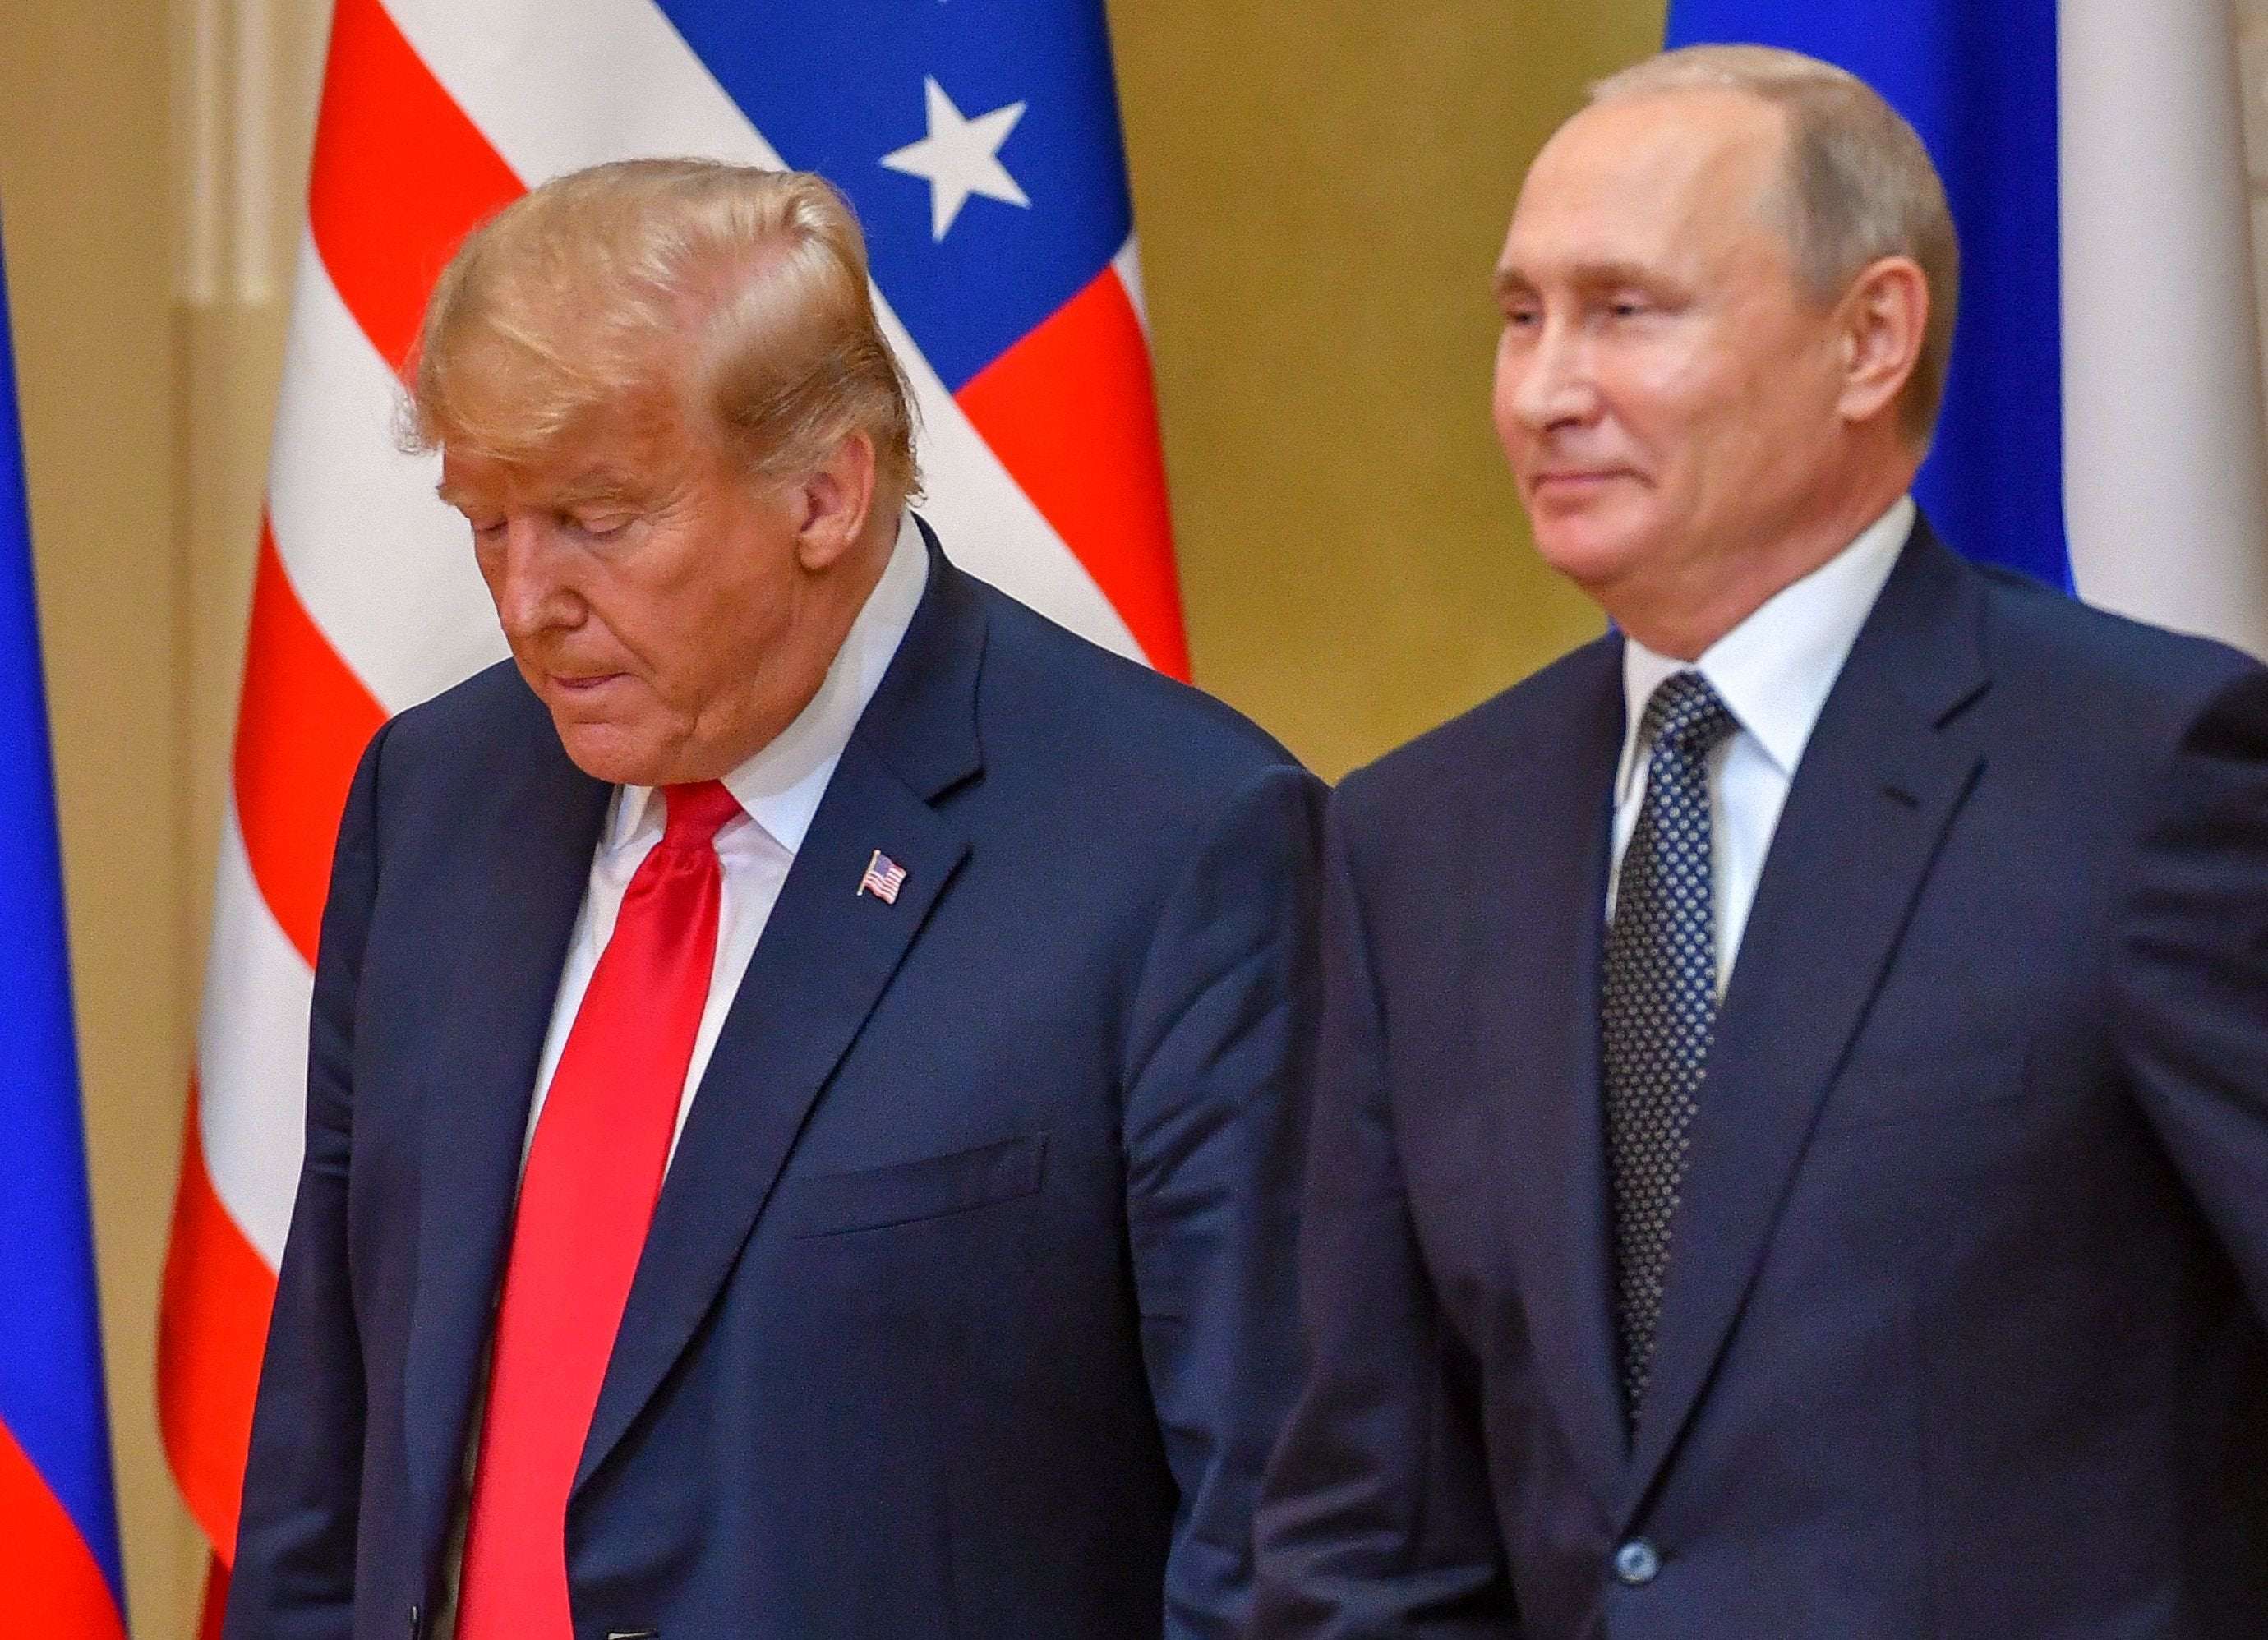 image for 'Treachery'—Donald Trump Faces Backlash for Asking Vladimir Putin a Favor